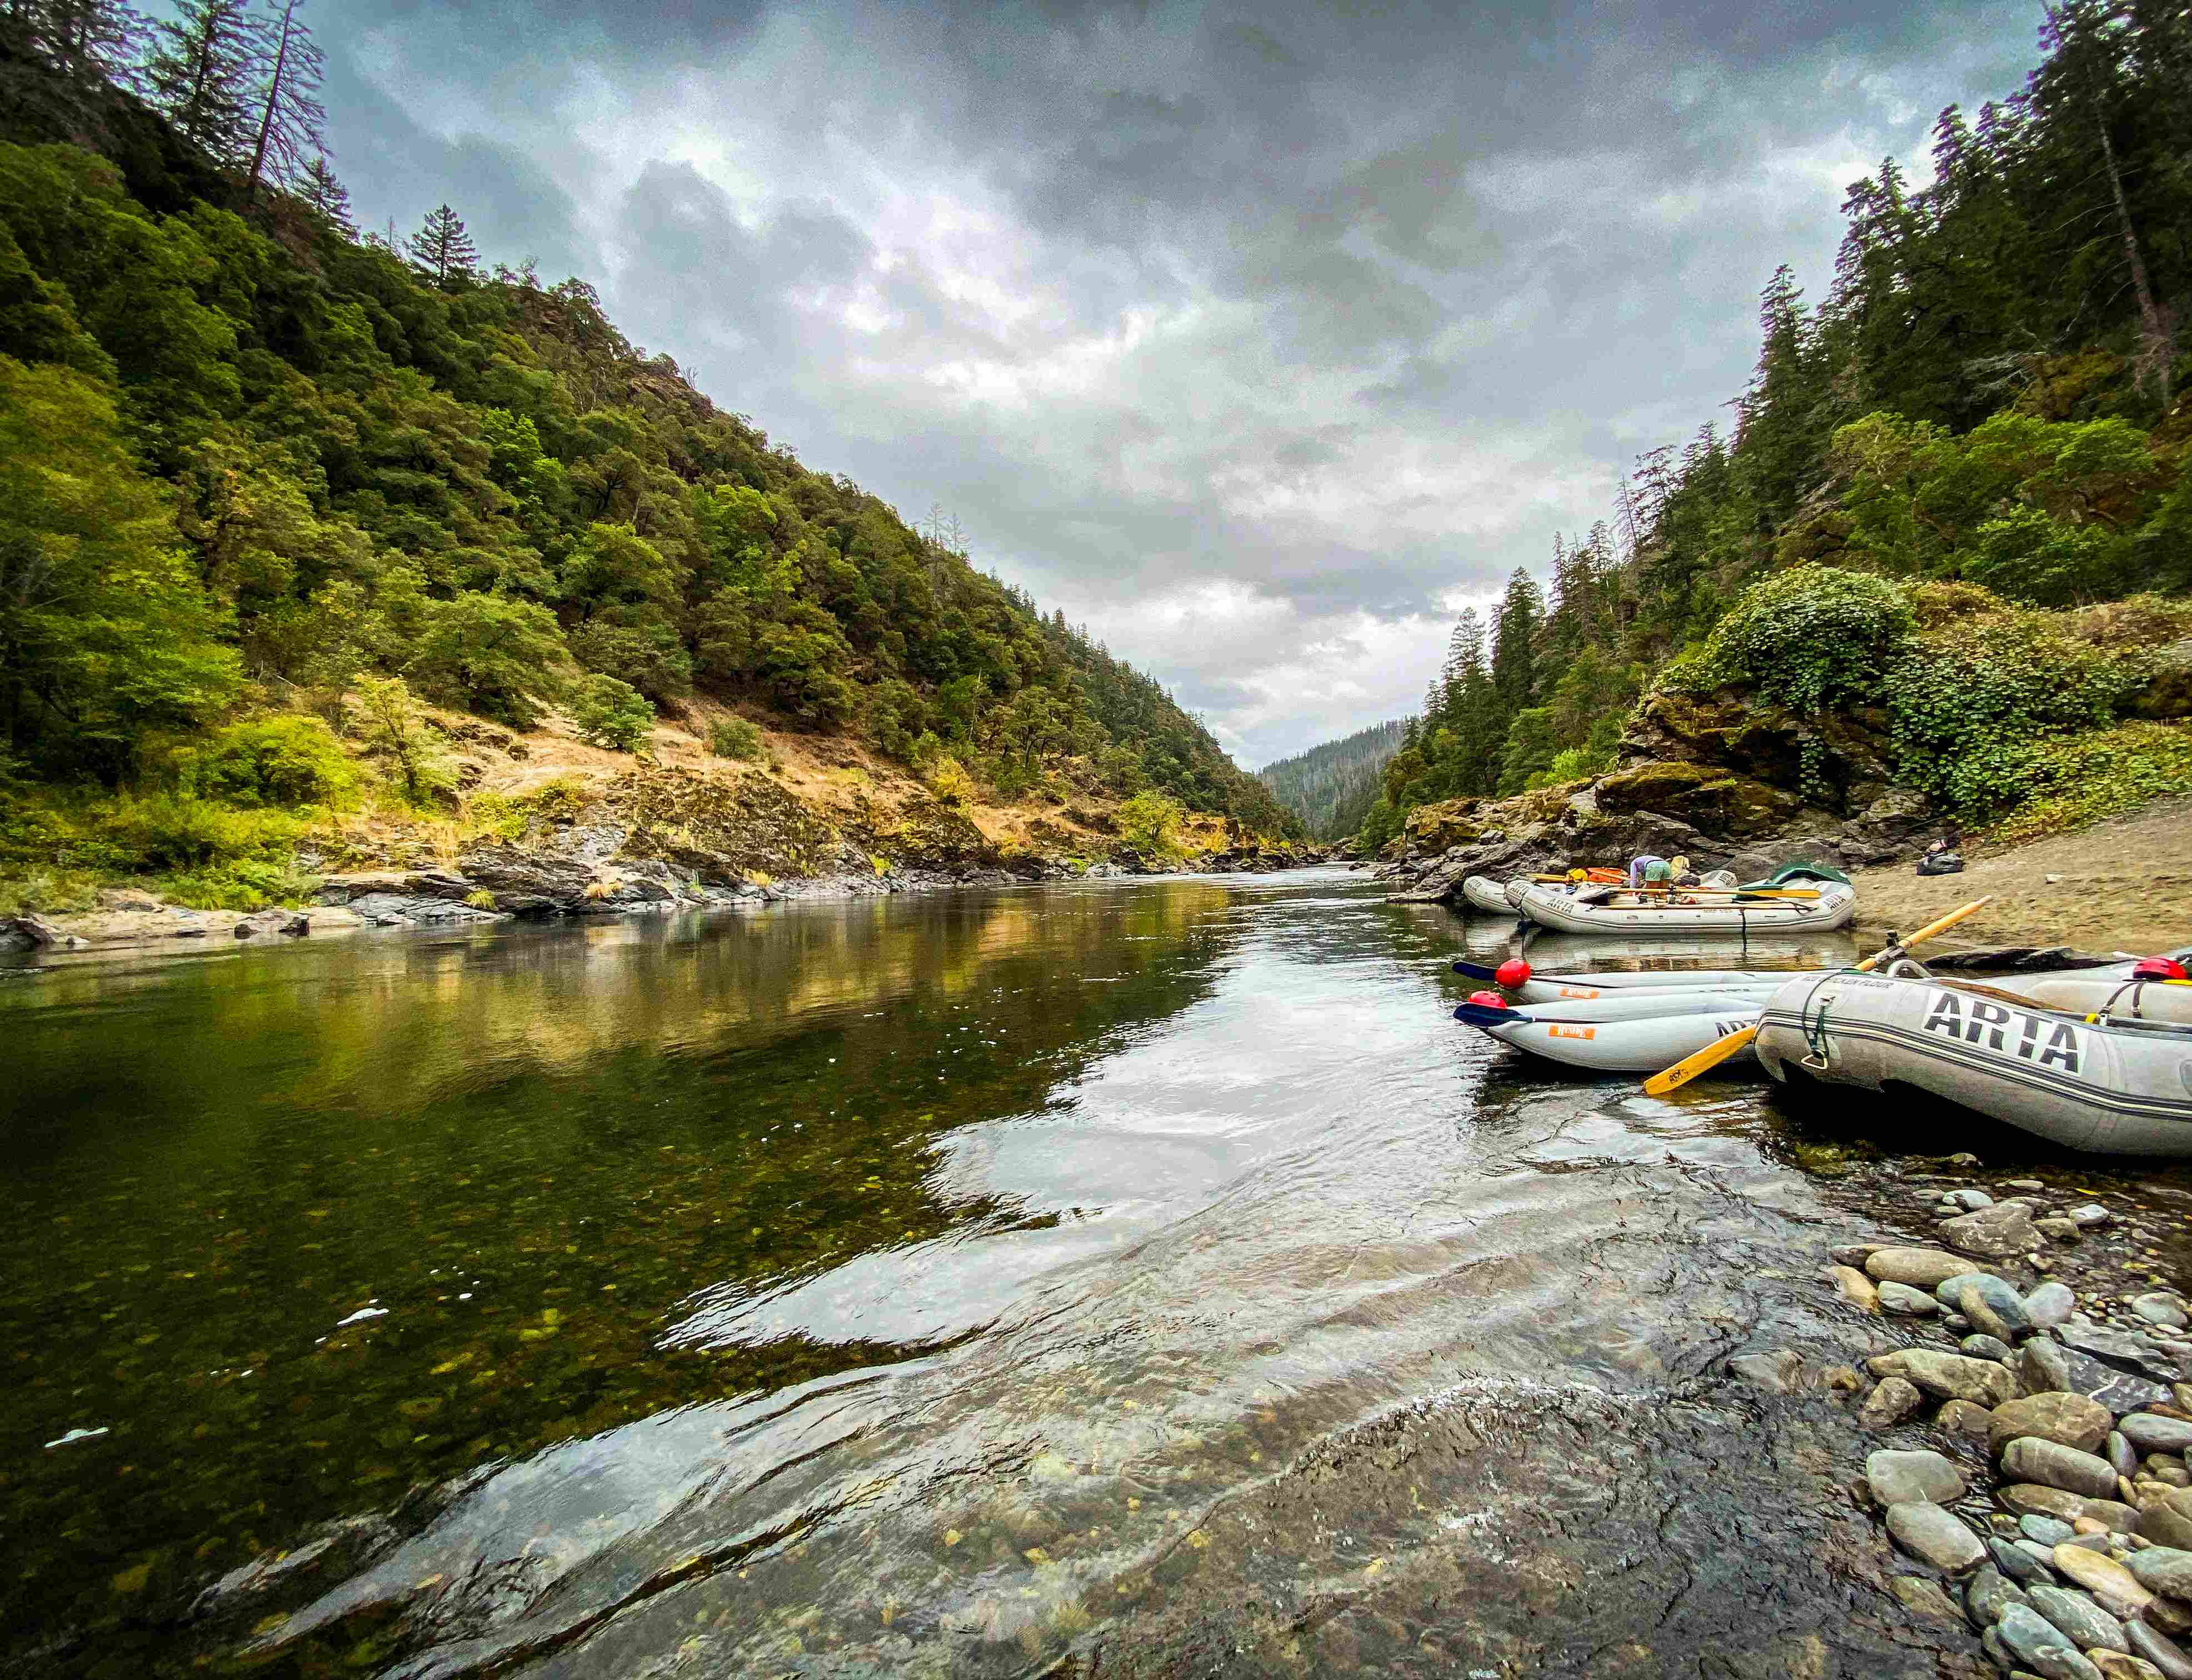 Rogue River | Photo by Sinjin Eberle